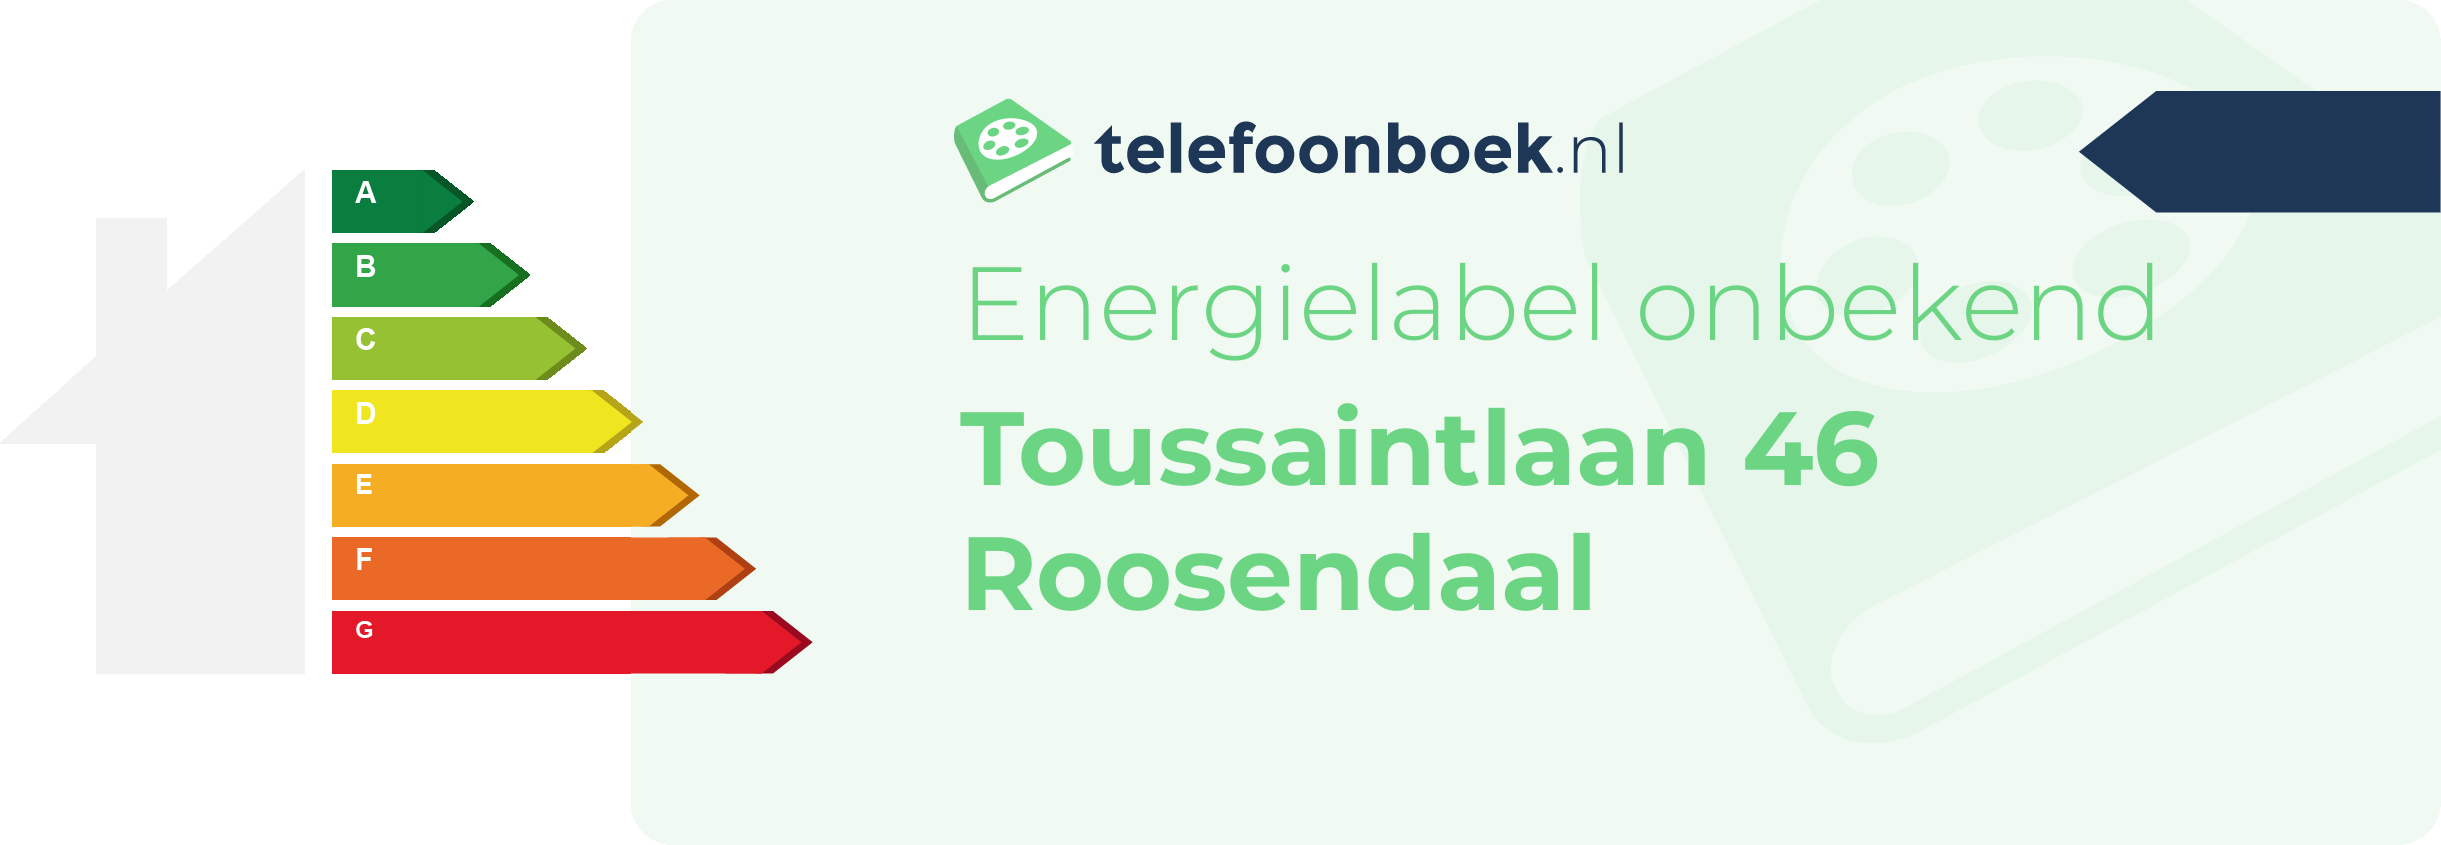 Energielabel Toussaintlaan 46 Roosendaal